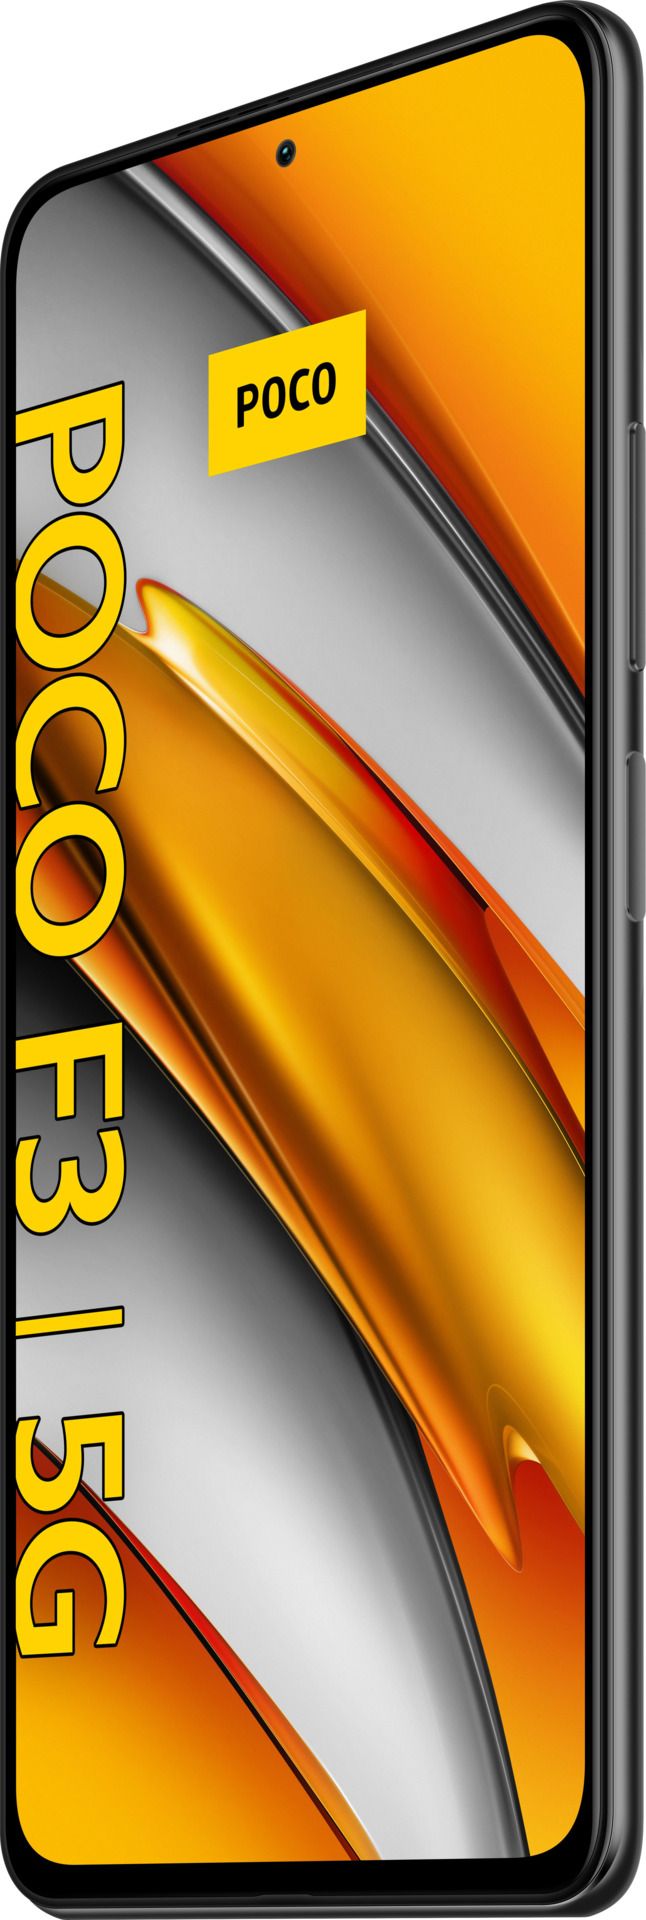 Xiaomi Poco F3 5g Smartphone Night Black 8256 Gb Lte Dual Sim Eu Mzb08rfeu Cyberport 4666